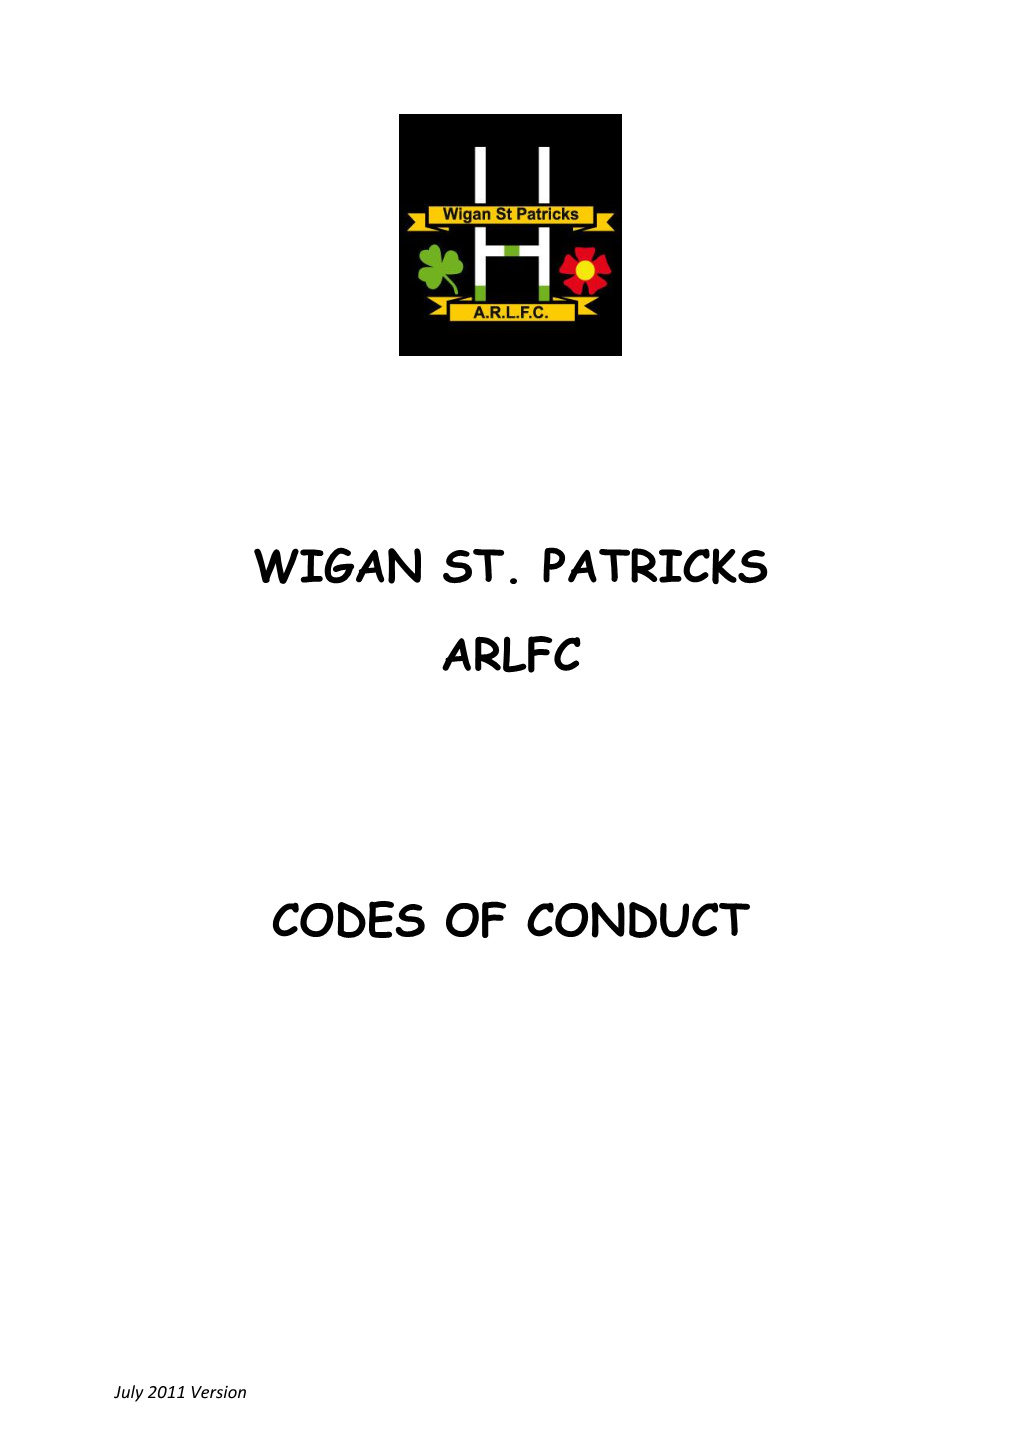 Wigan St. Patricks Arlfc Codes of Conduct